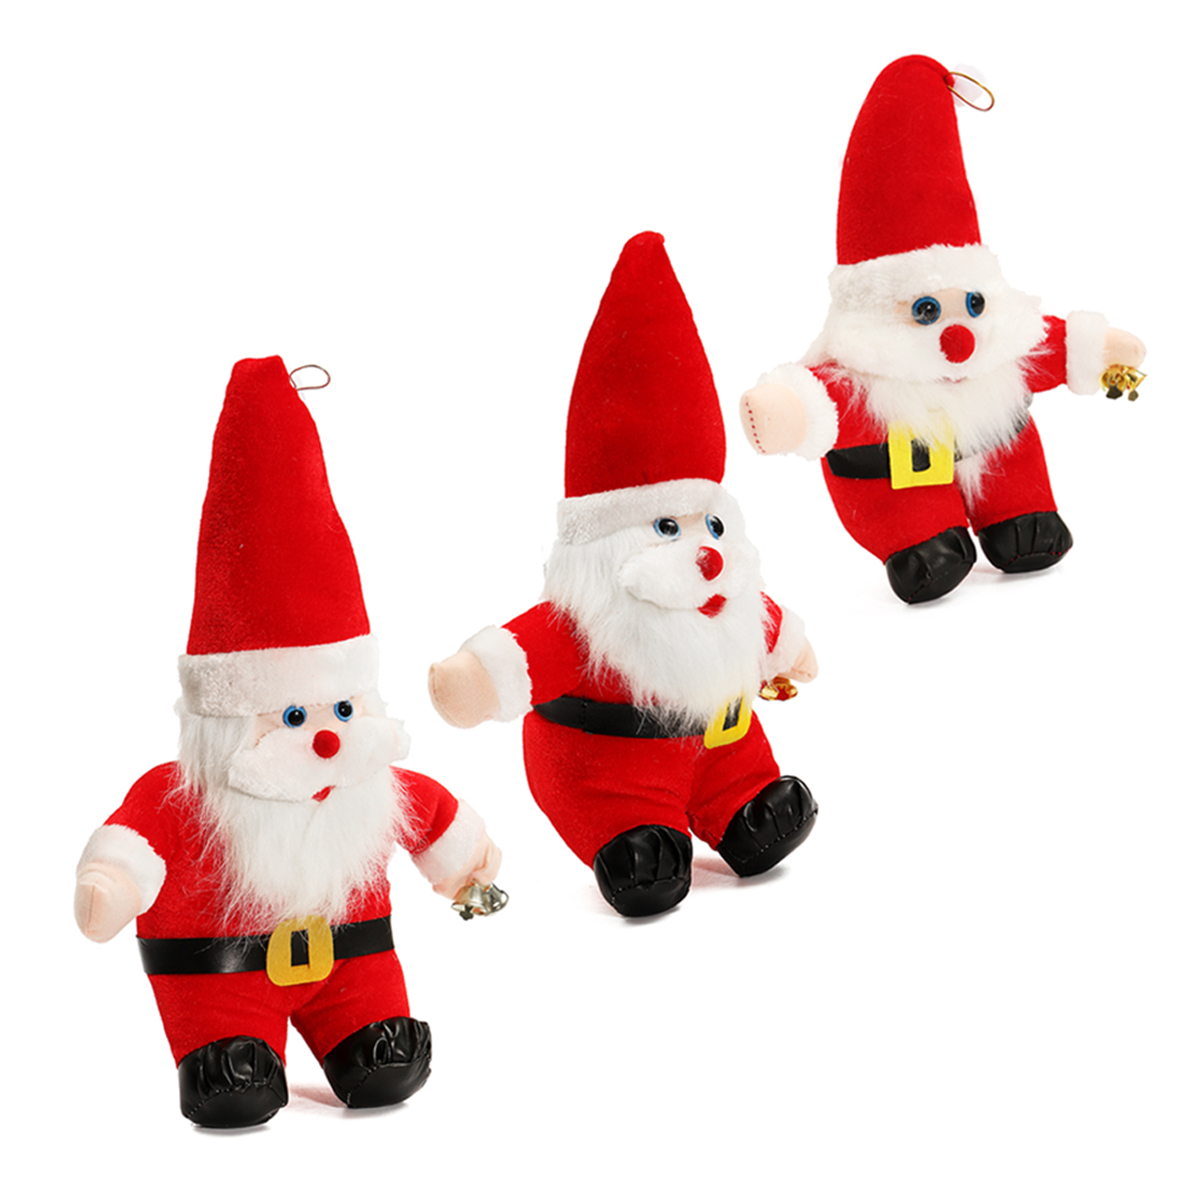 Christmas-Santa-Claus-Doll-Gift-Present-Xmas-Tree-Hanging-Ornament-Home-Decor-1087849-4